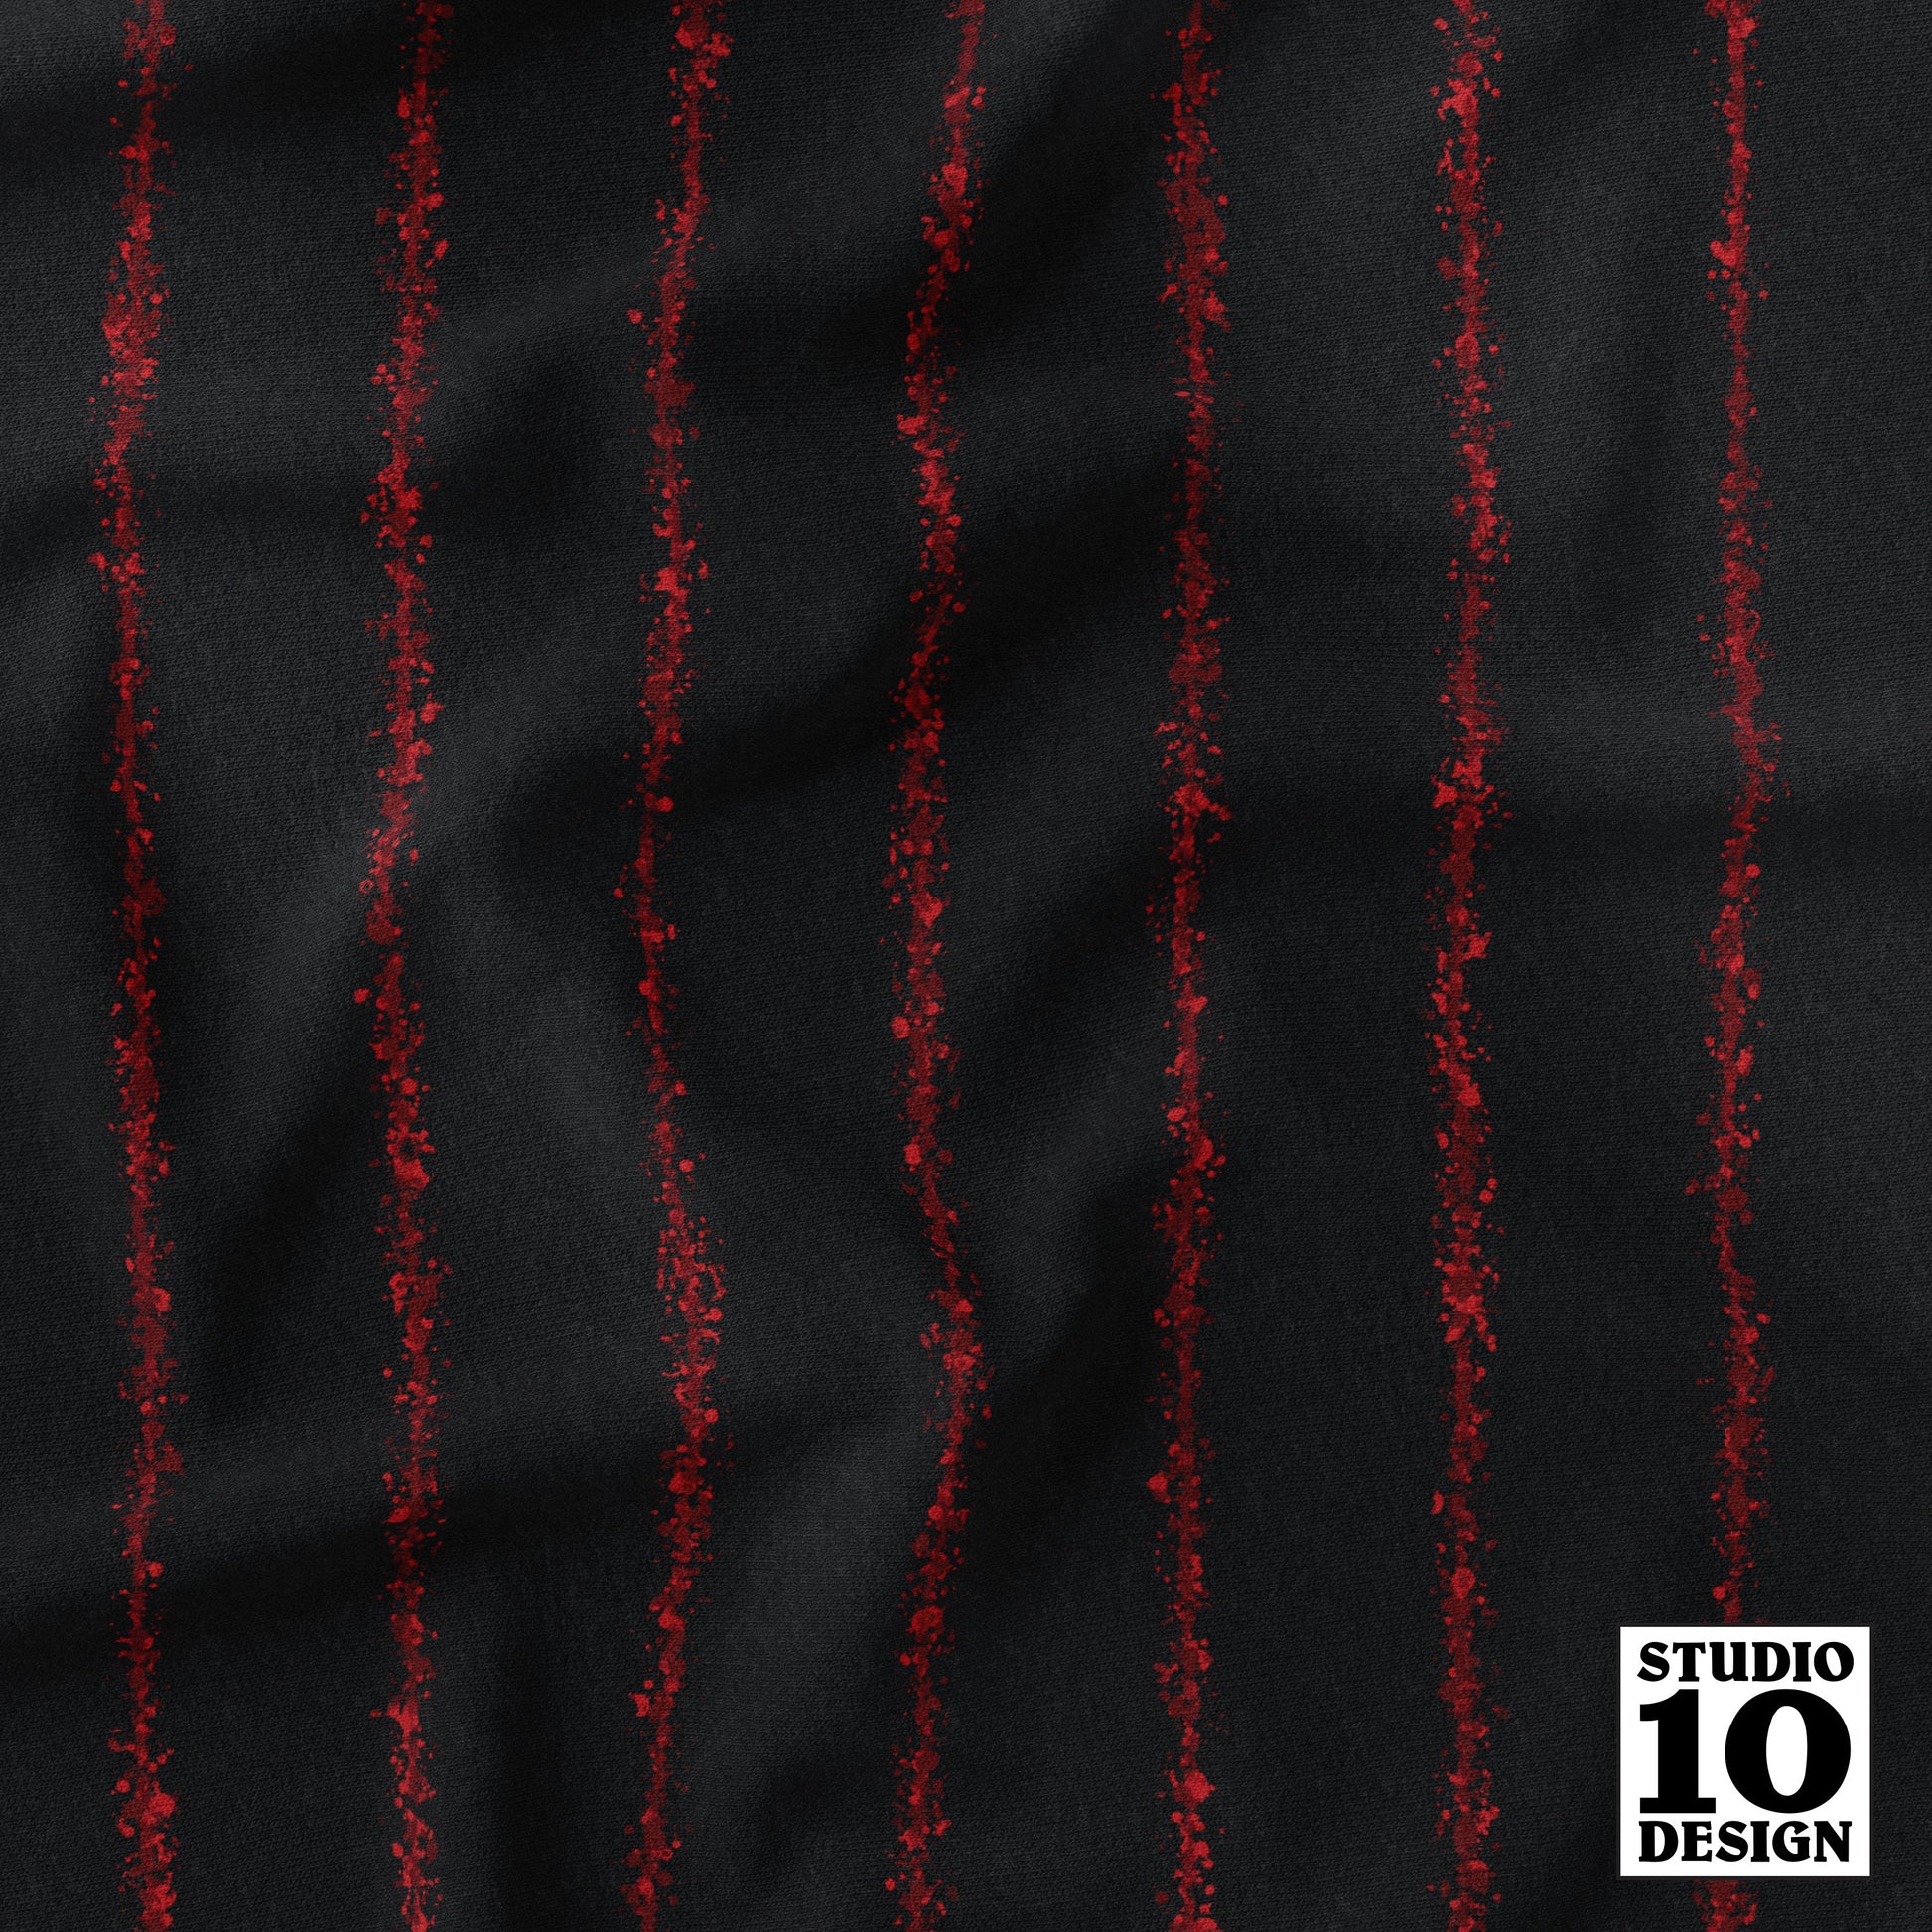 Splatter Pinstripe Red + Black Printed Fabric by Studio Ten Design